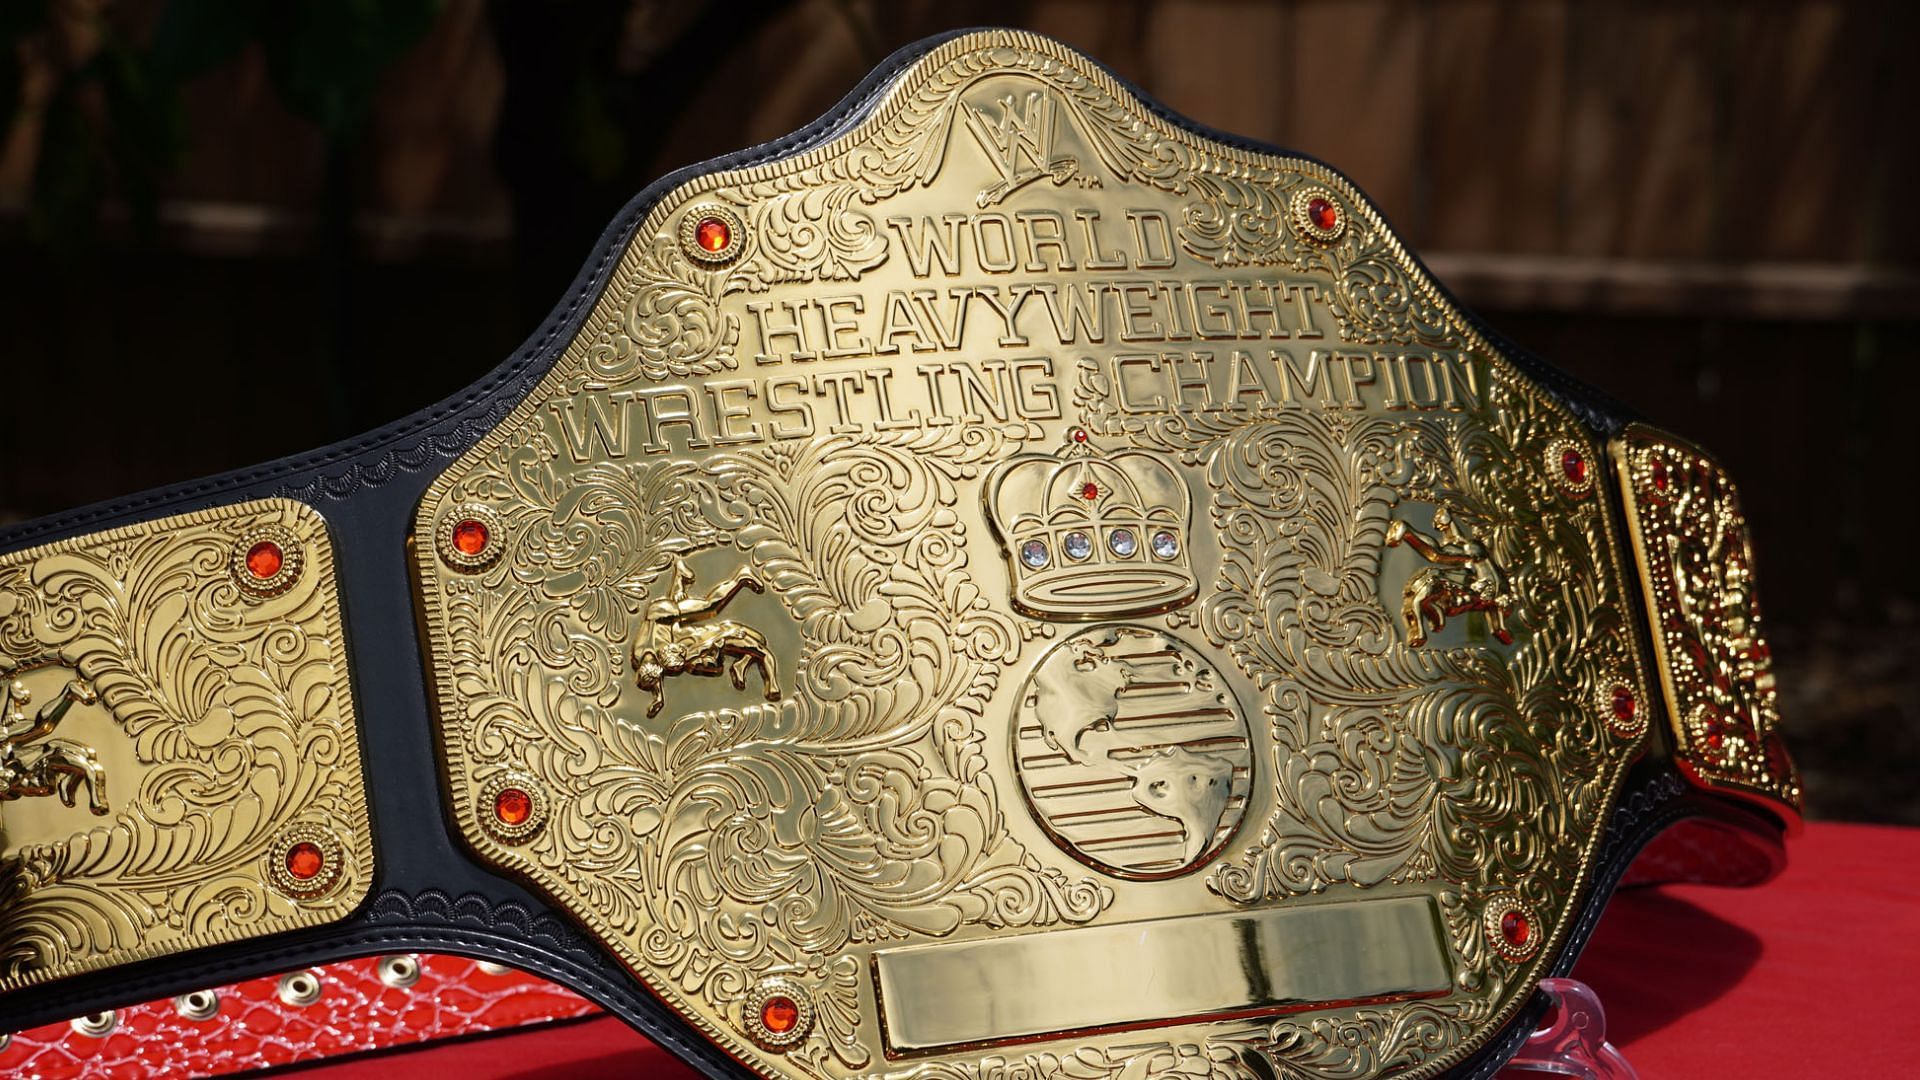 The Big Gold Belt was a prestigious title in WWE